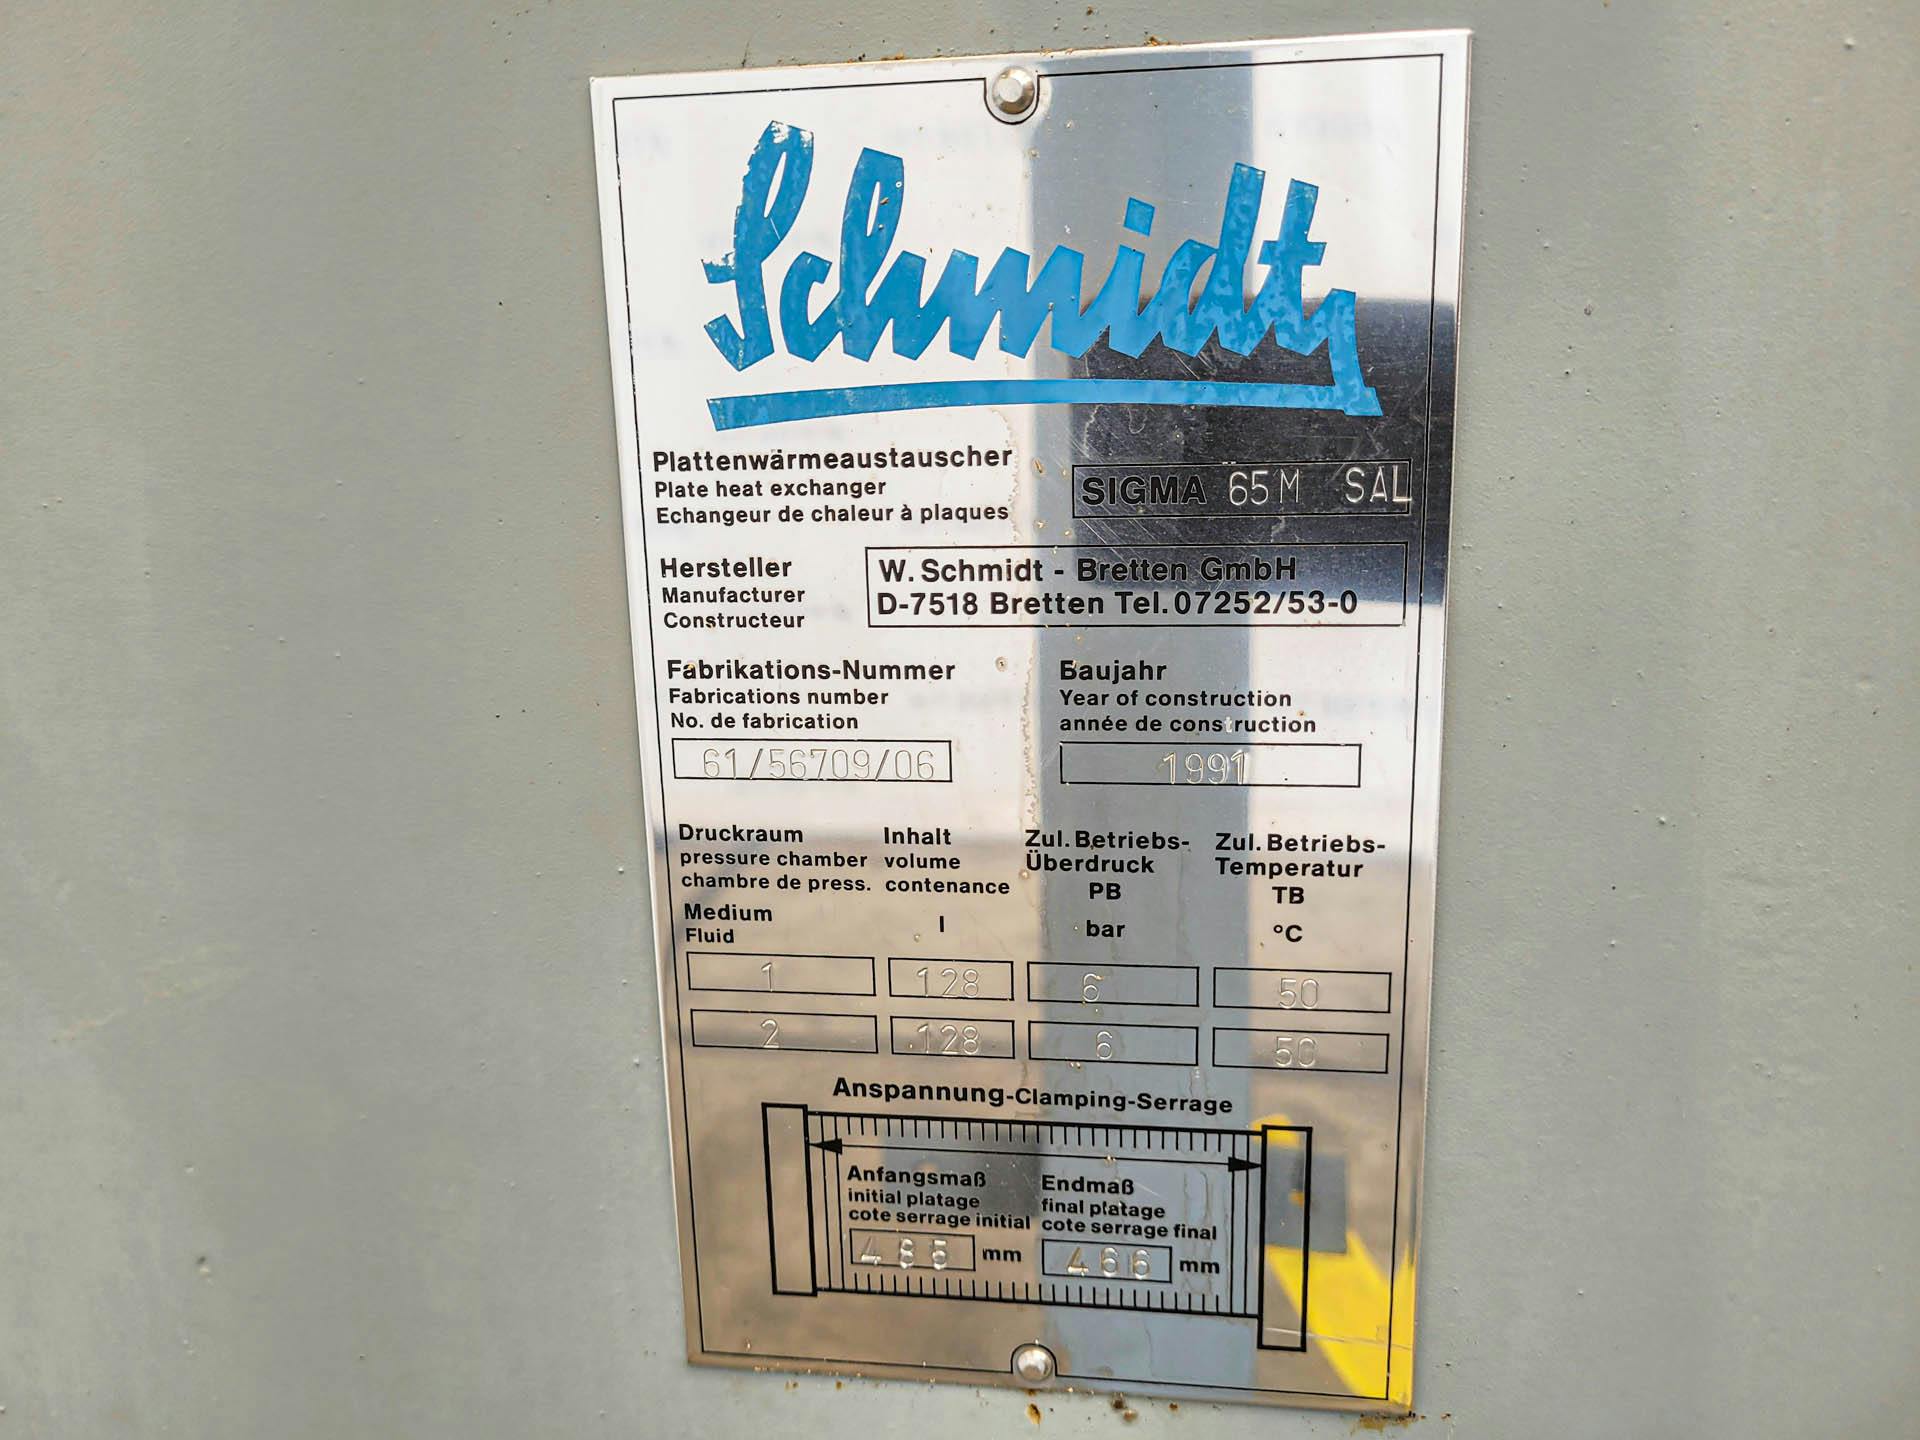 Schmidt Sigma 65M SAL - Permutador de calor de placas - image 5